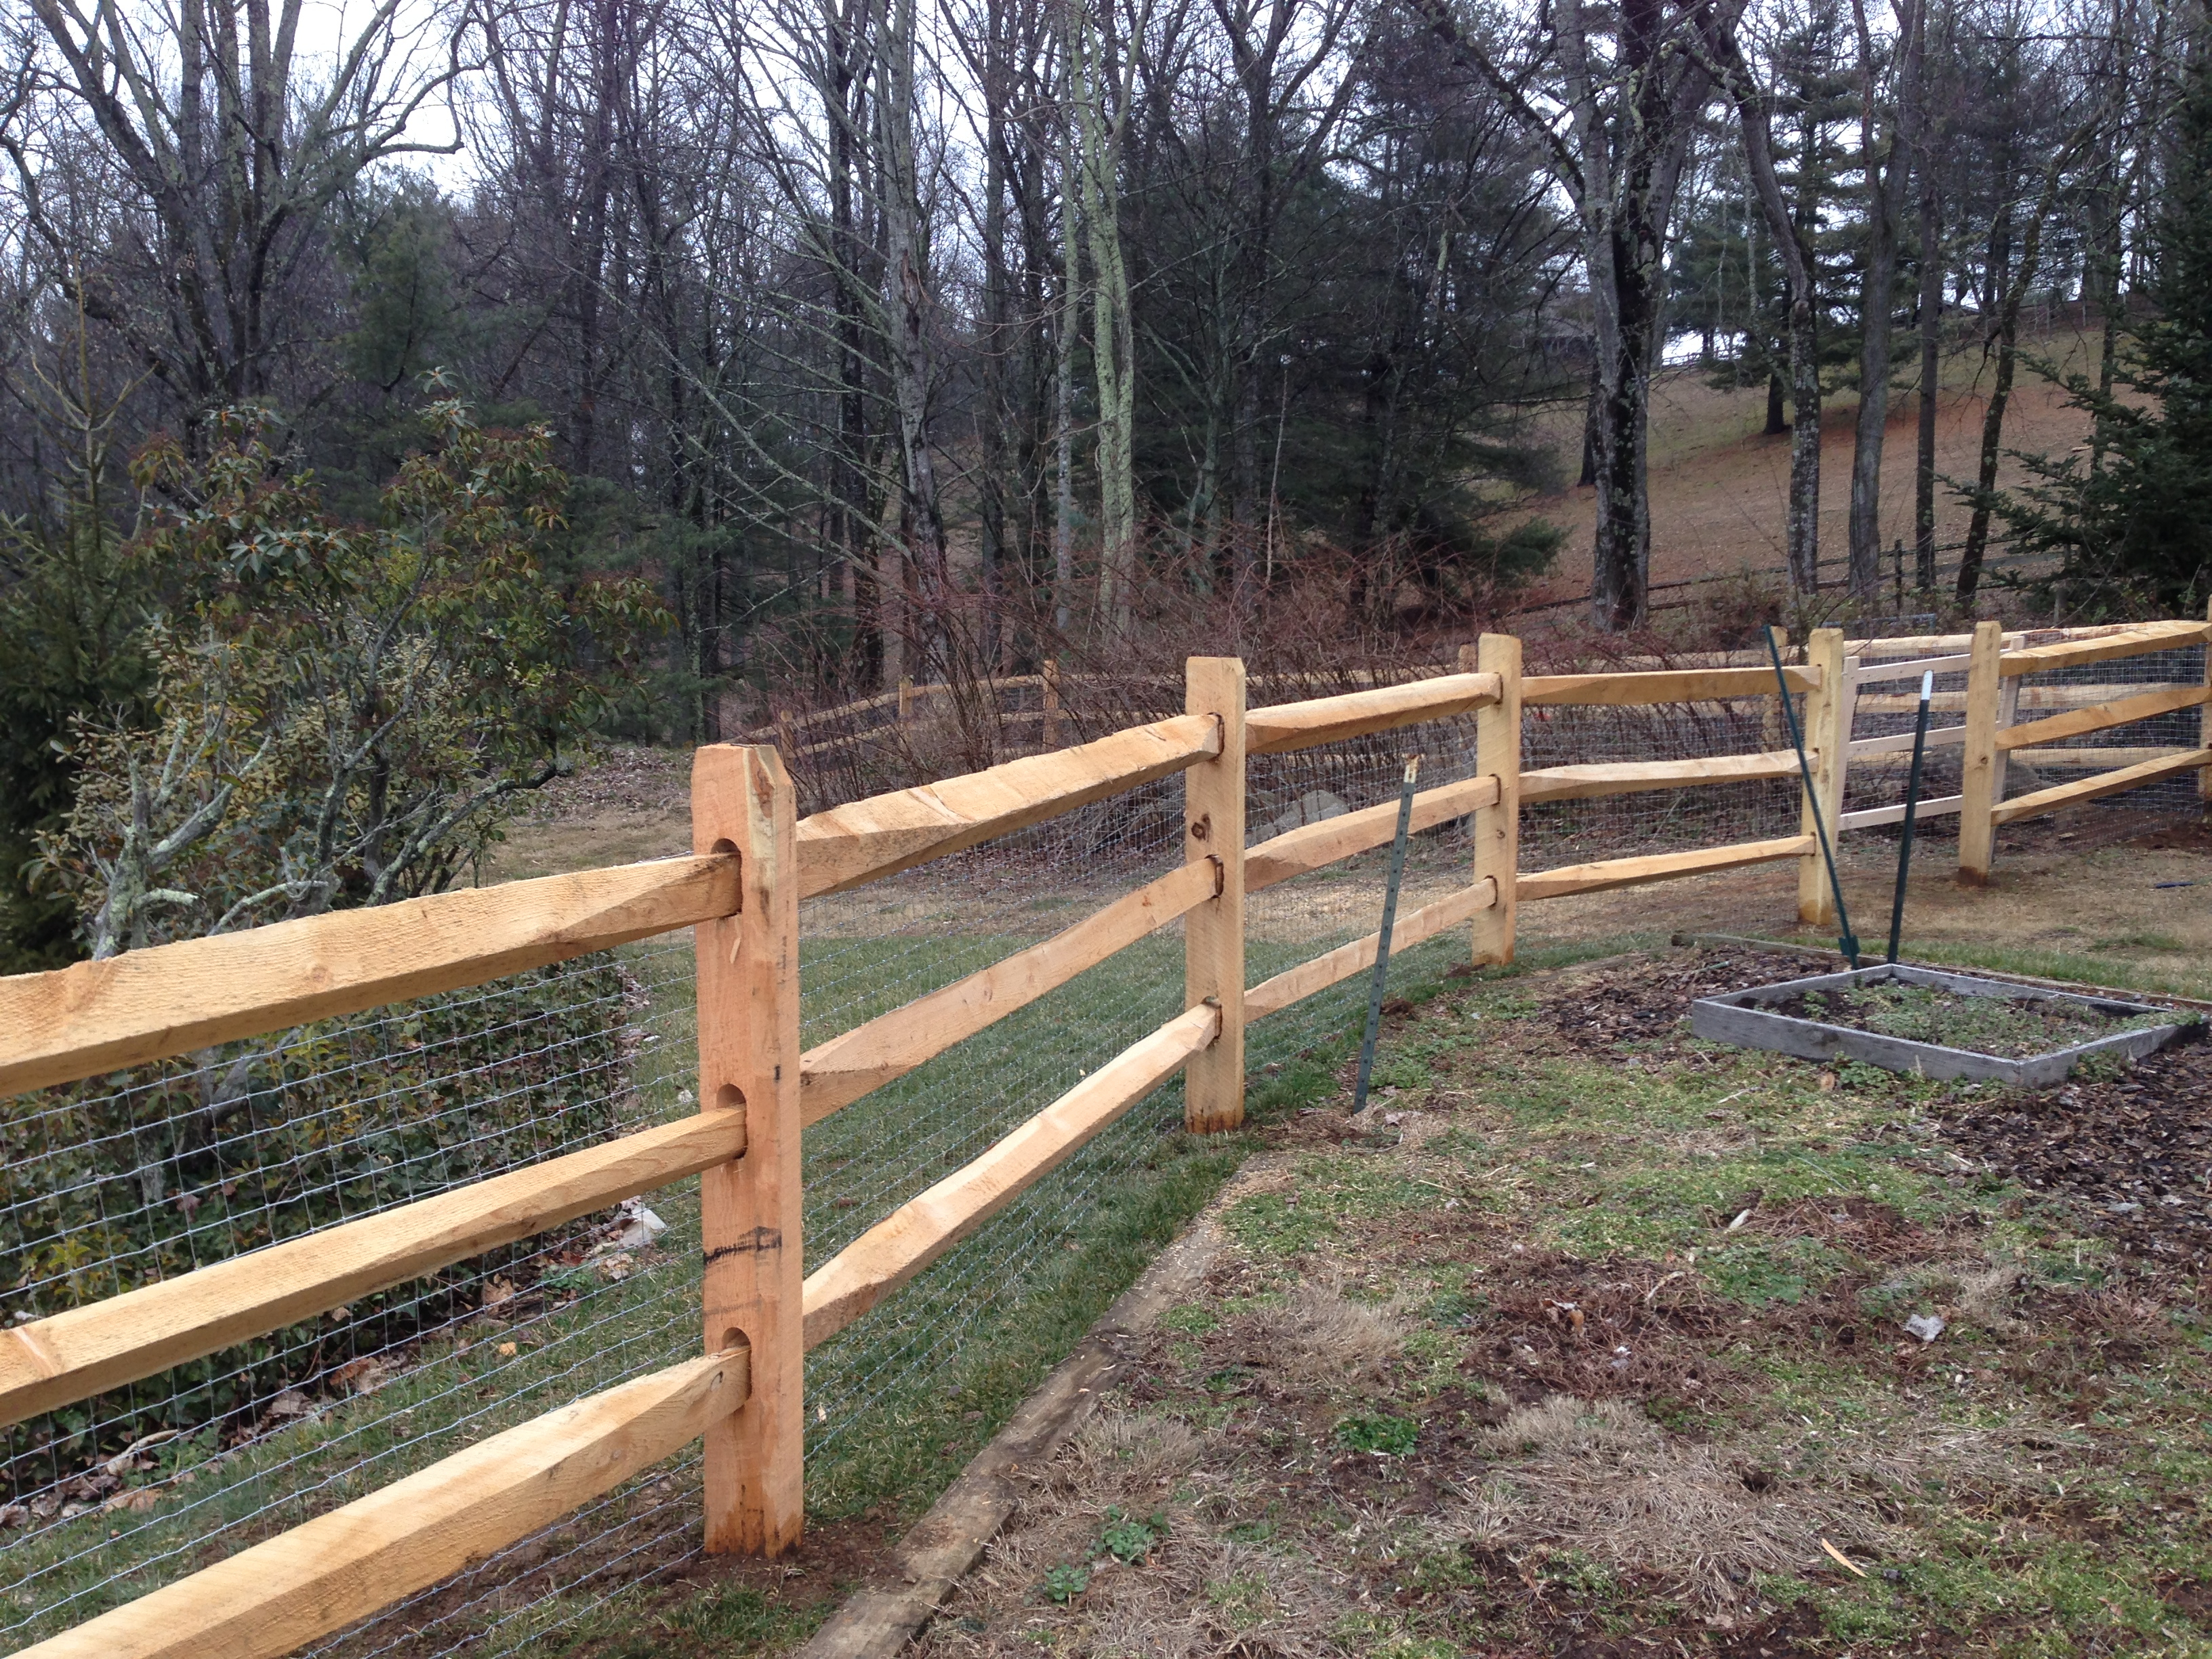 Treated Cedar Split Rail Fence Fences Ideas inside dimensions 3264 X 2448